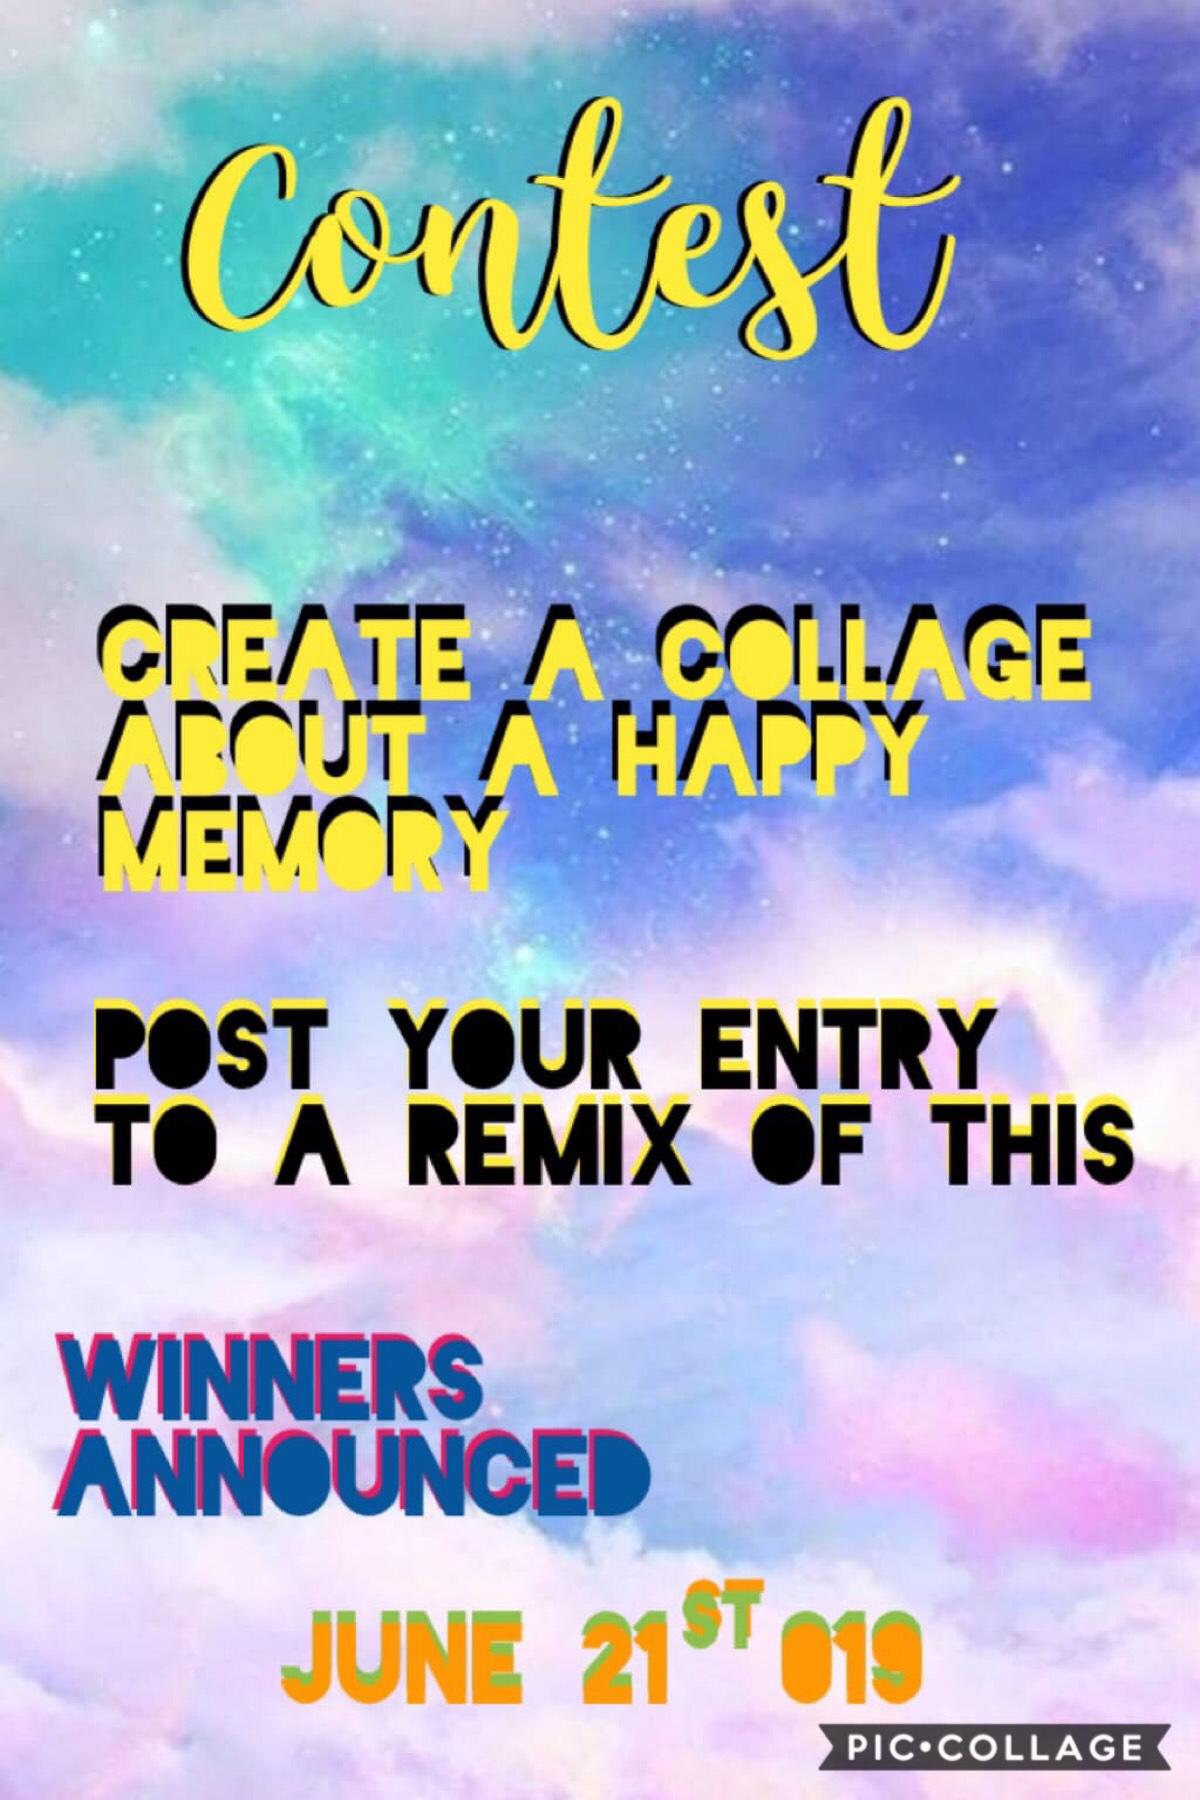 Follow CookieCrusher44 and enter her contest! 